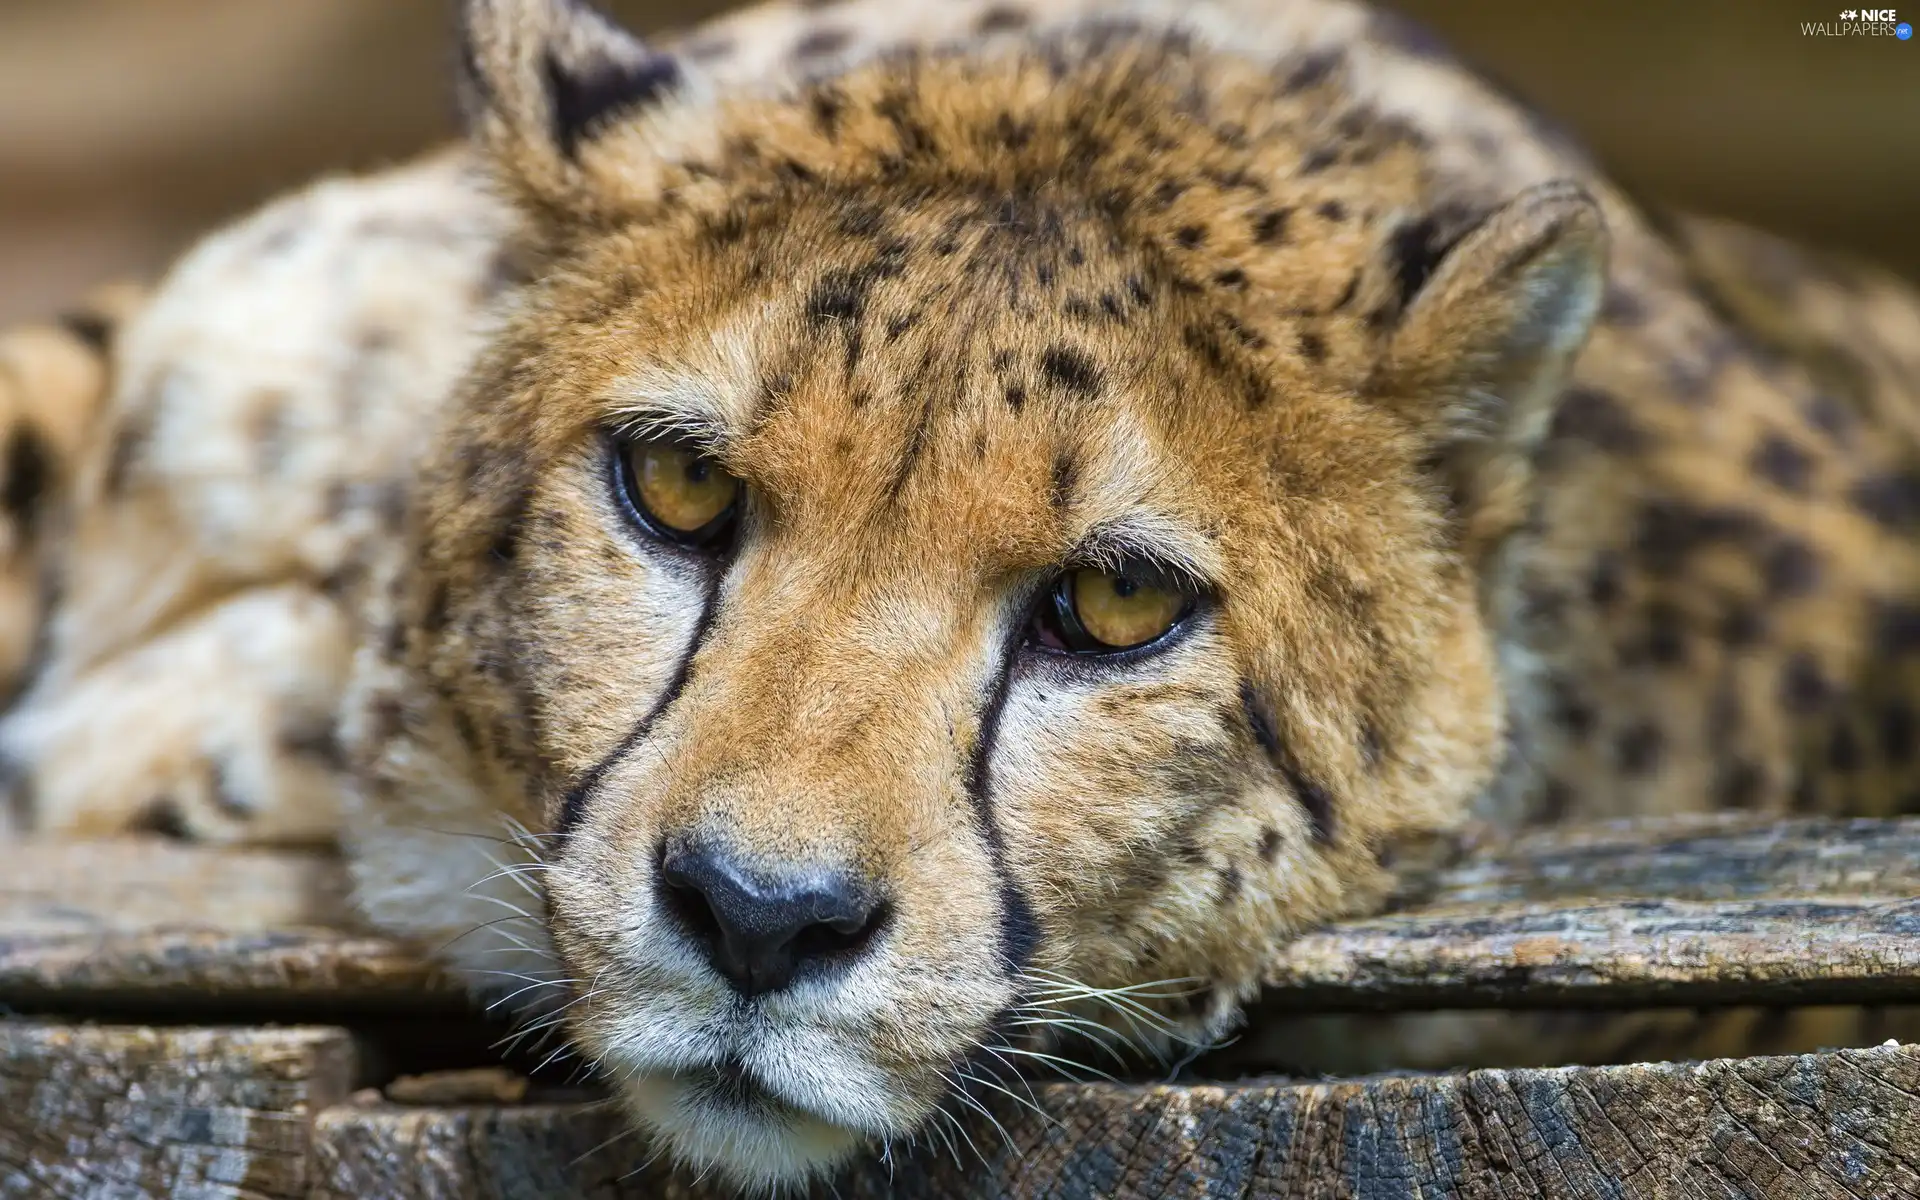 The look, Cheetah, boarding